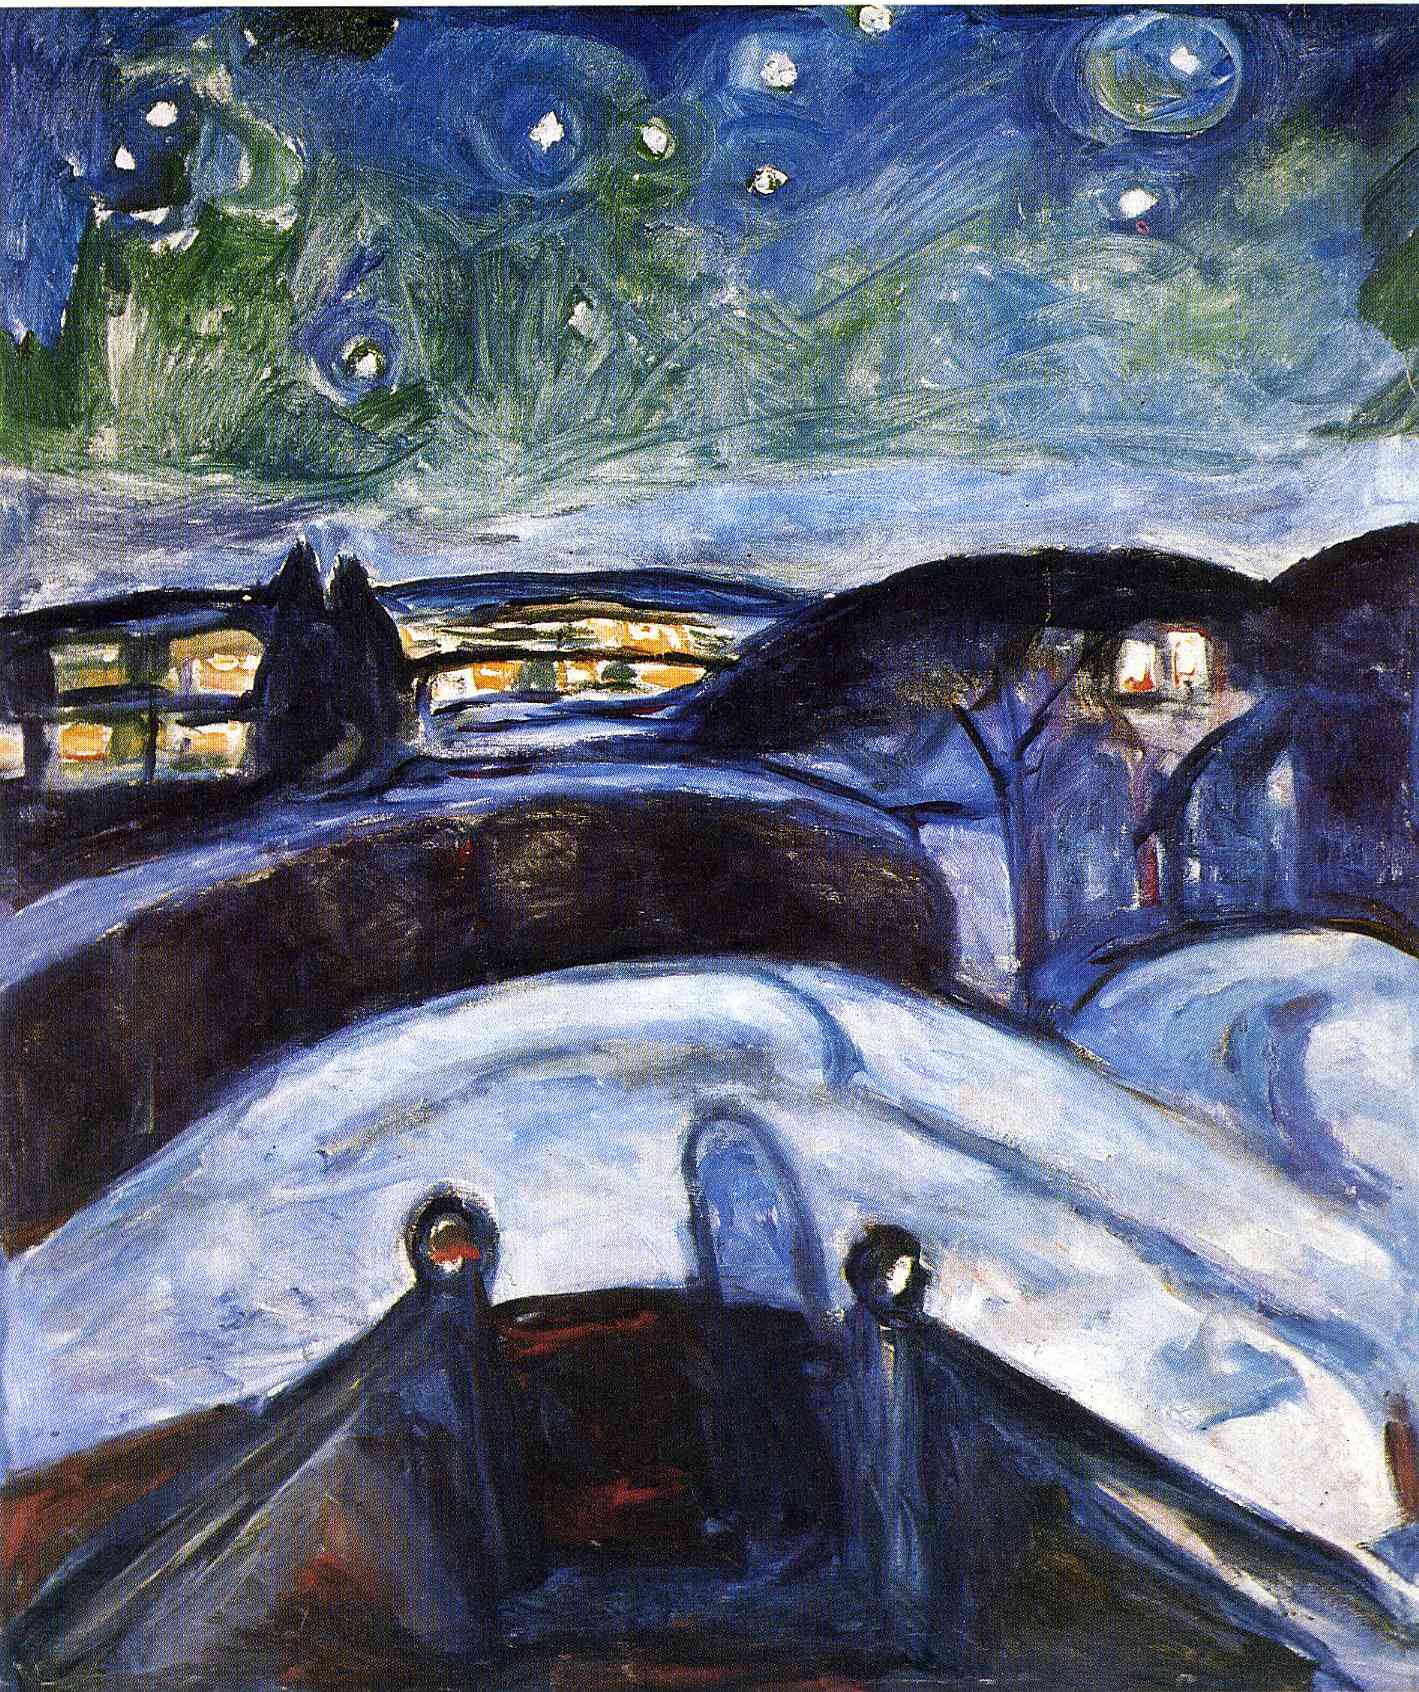 Hvězdná noc by Edvard Munch - 1922 - 1924 - 119 x 140 cm 